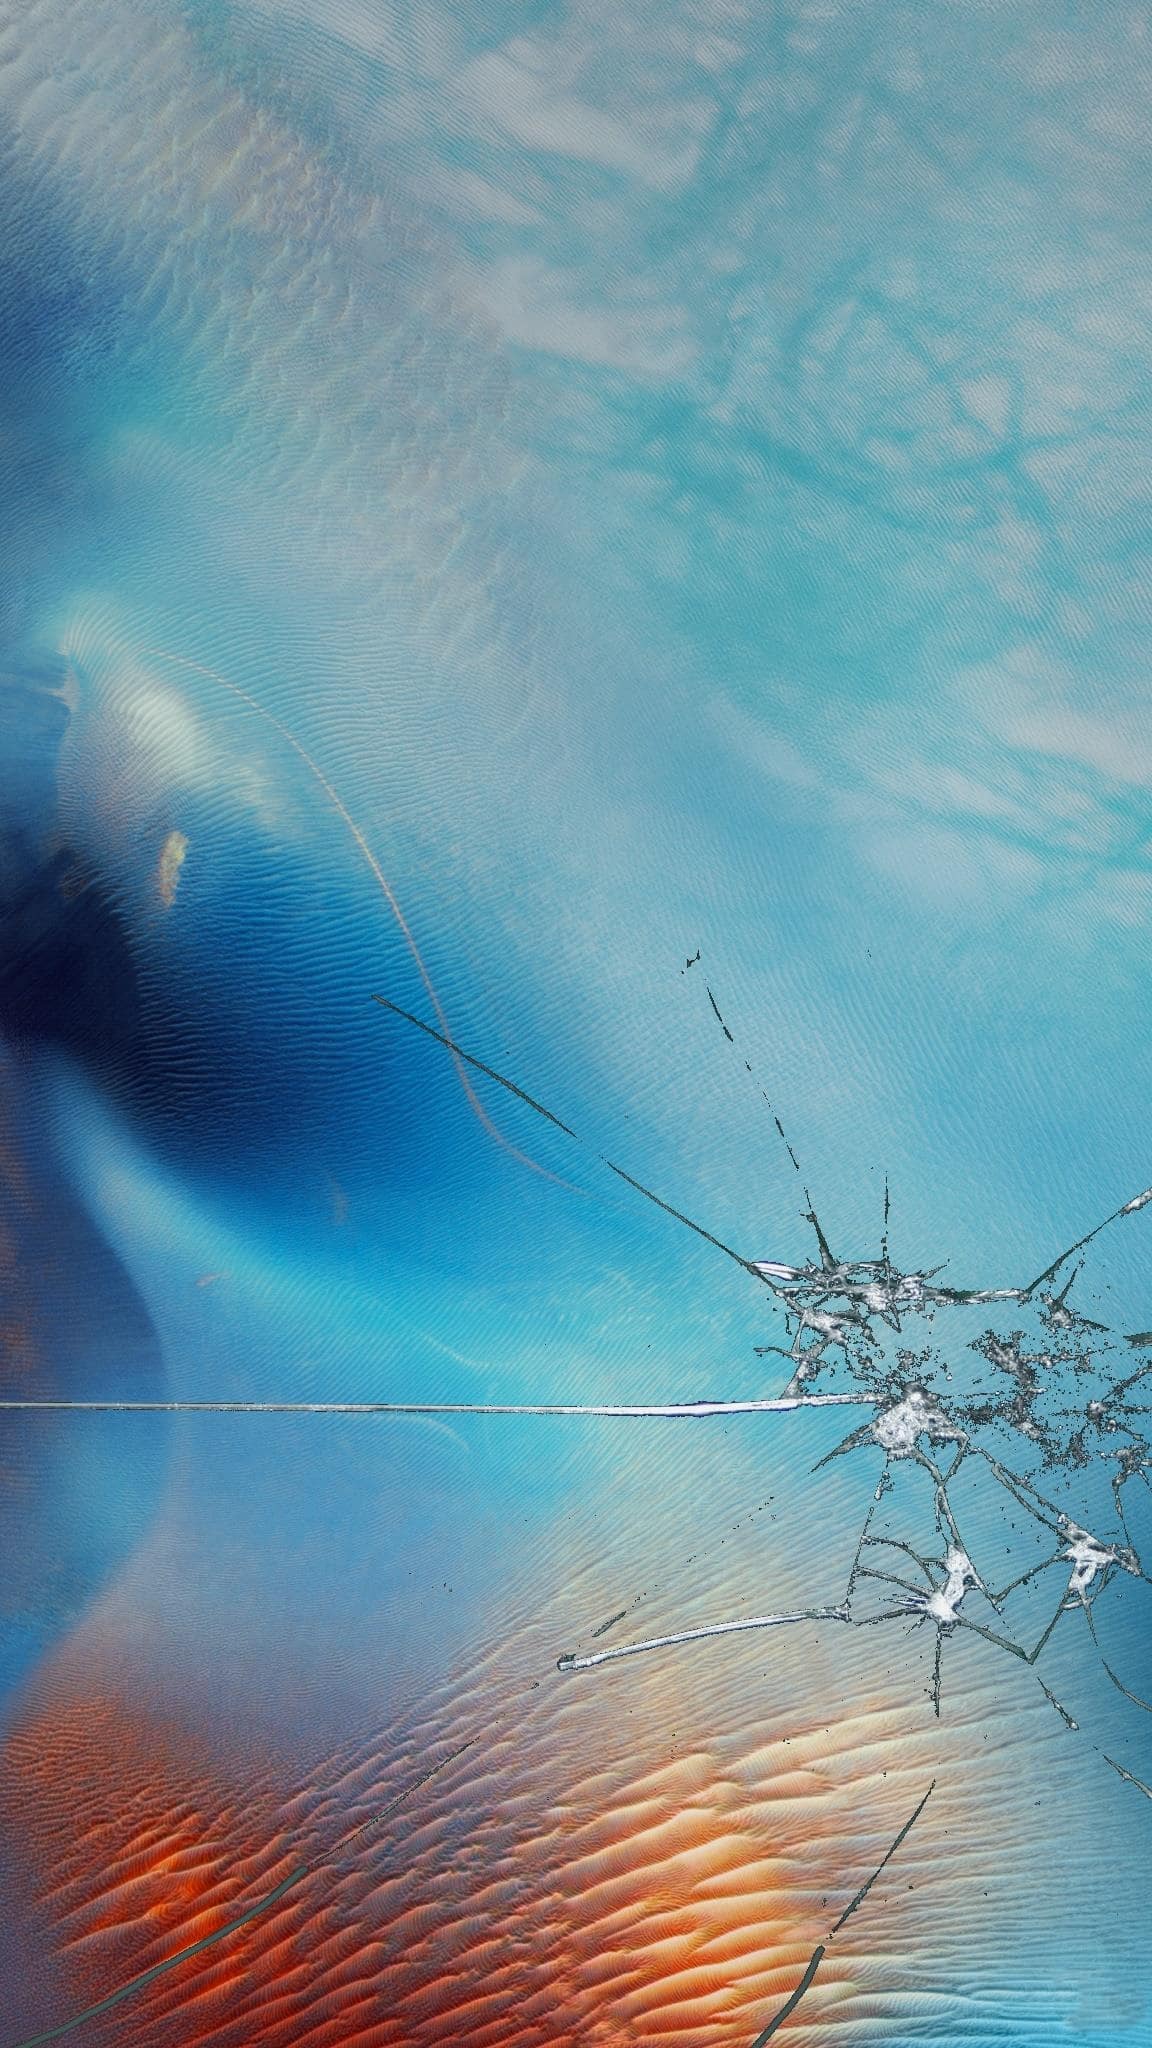 Cracked Screen Wallpaper